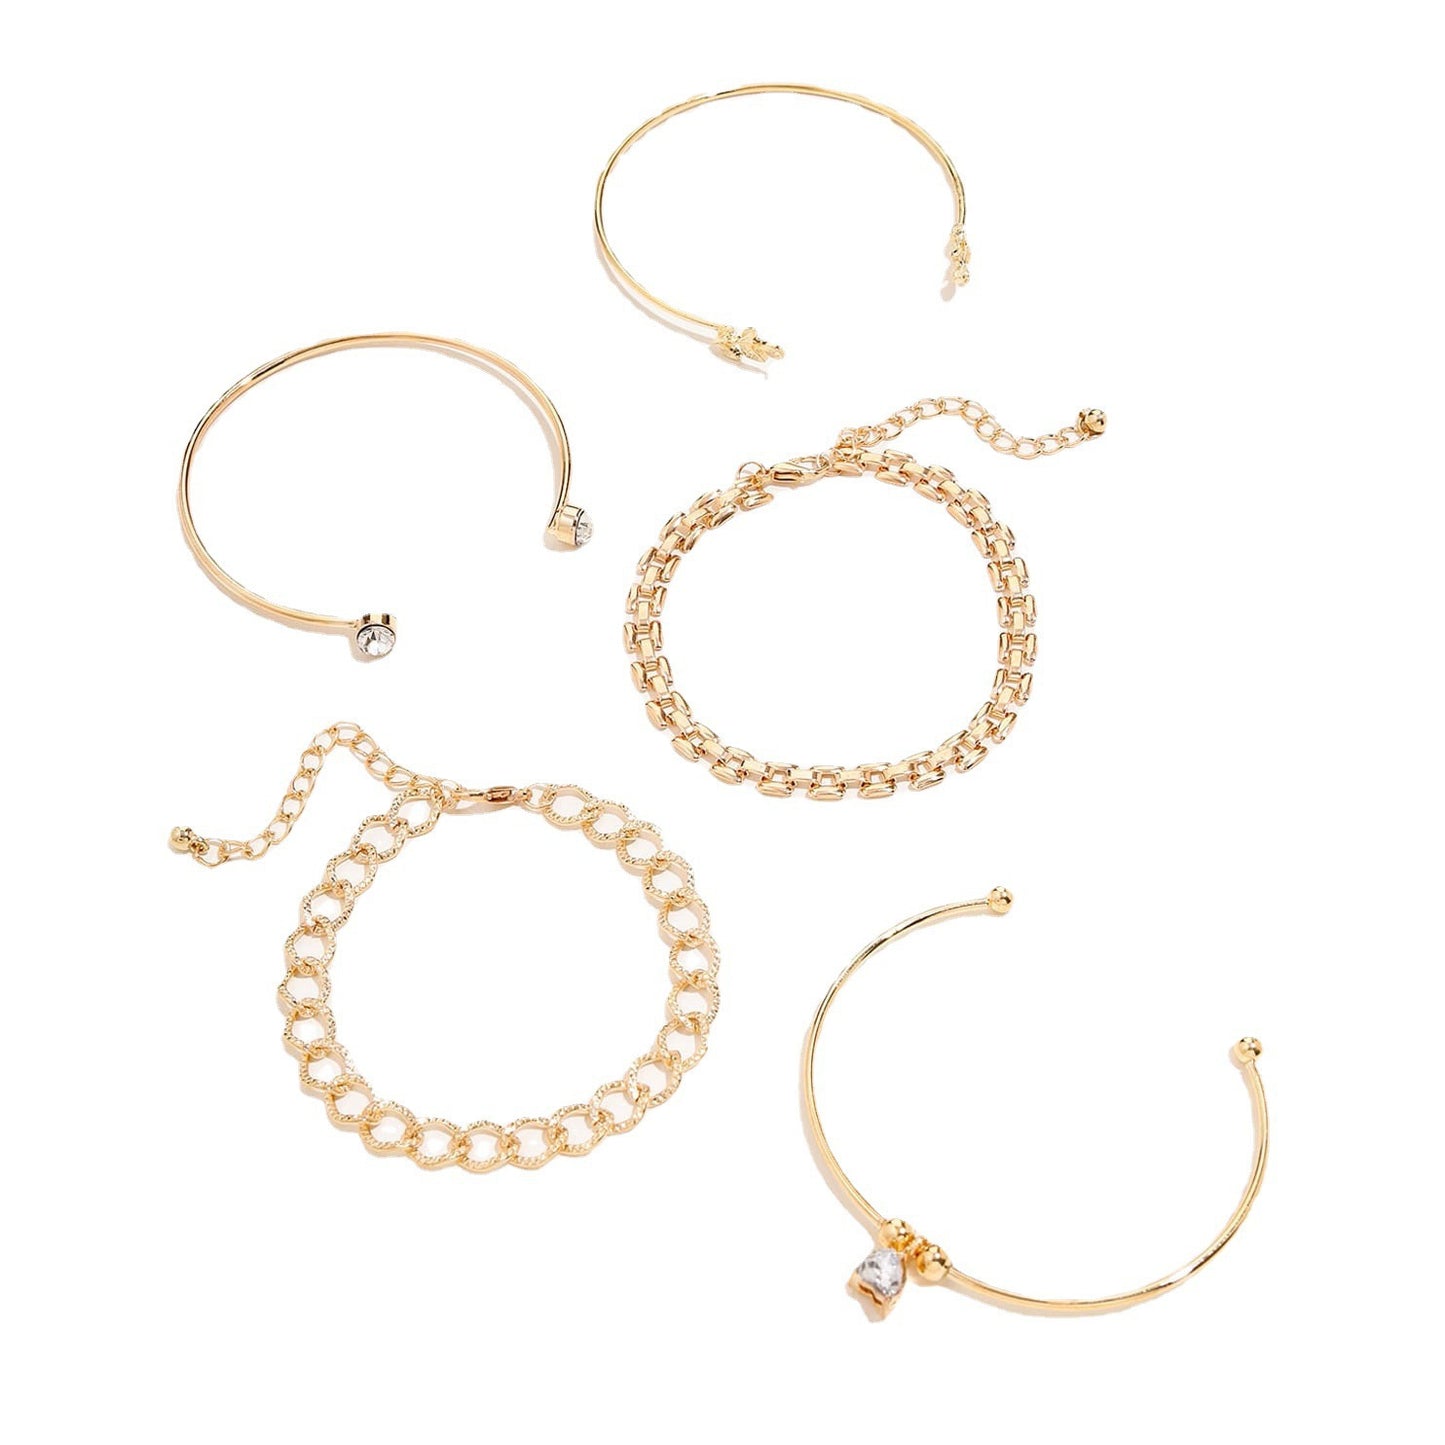 jewelry set for women